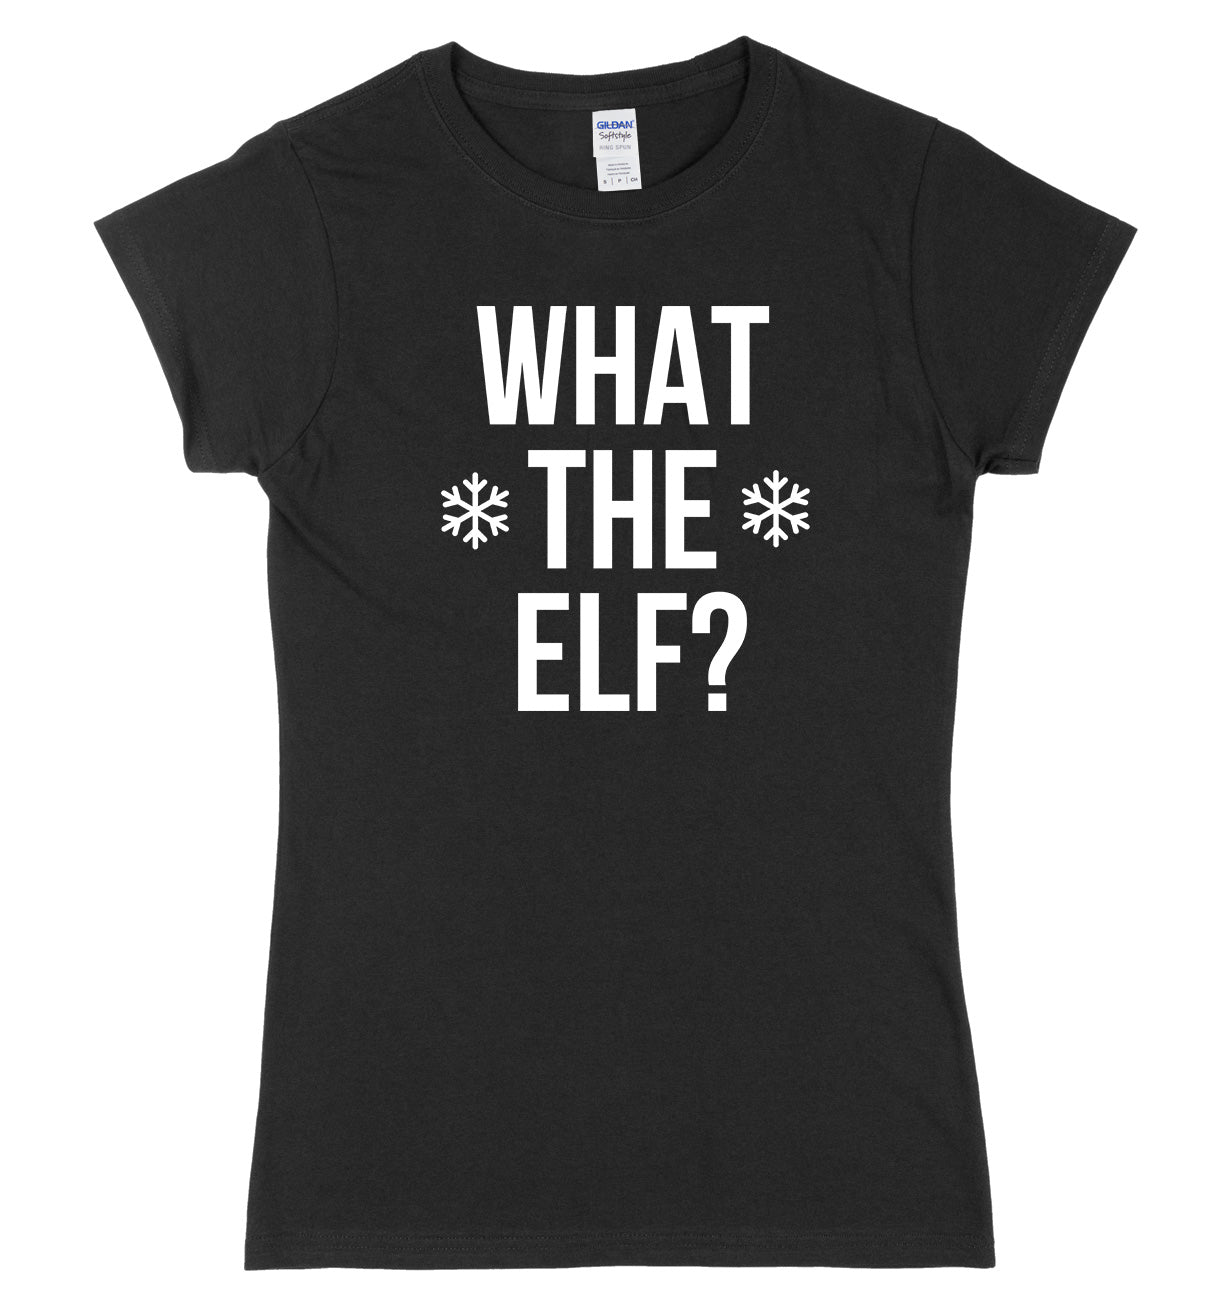 What The Elf? Womens Ladies Funny Slim Fit Christmas T-Shirt